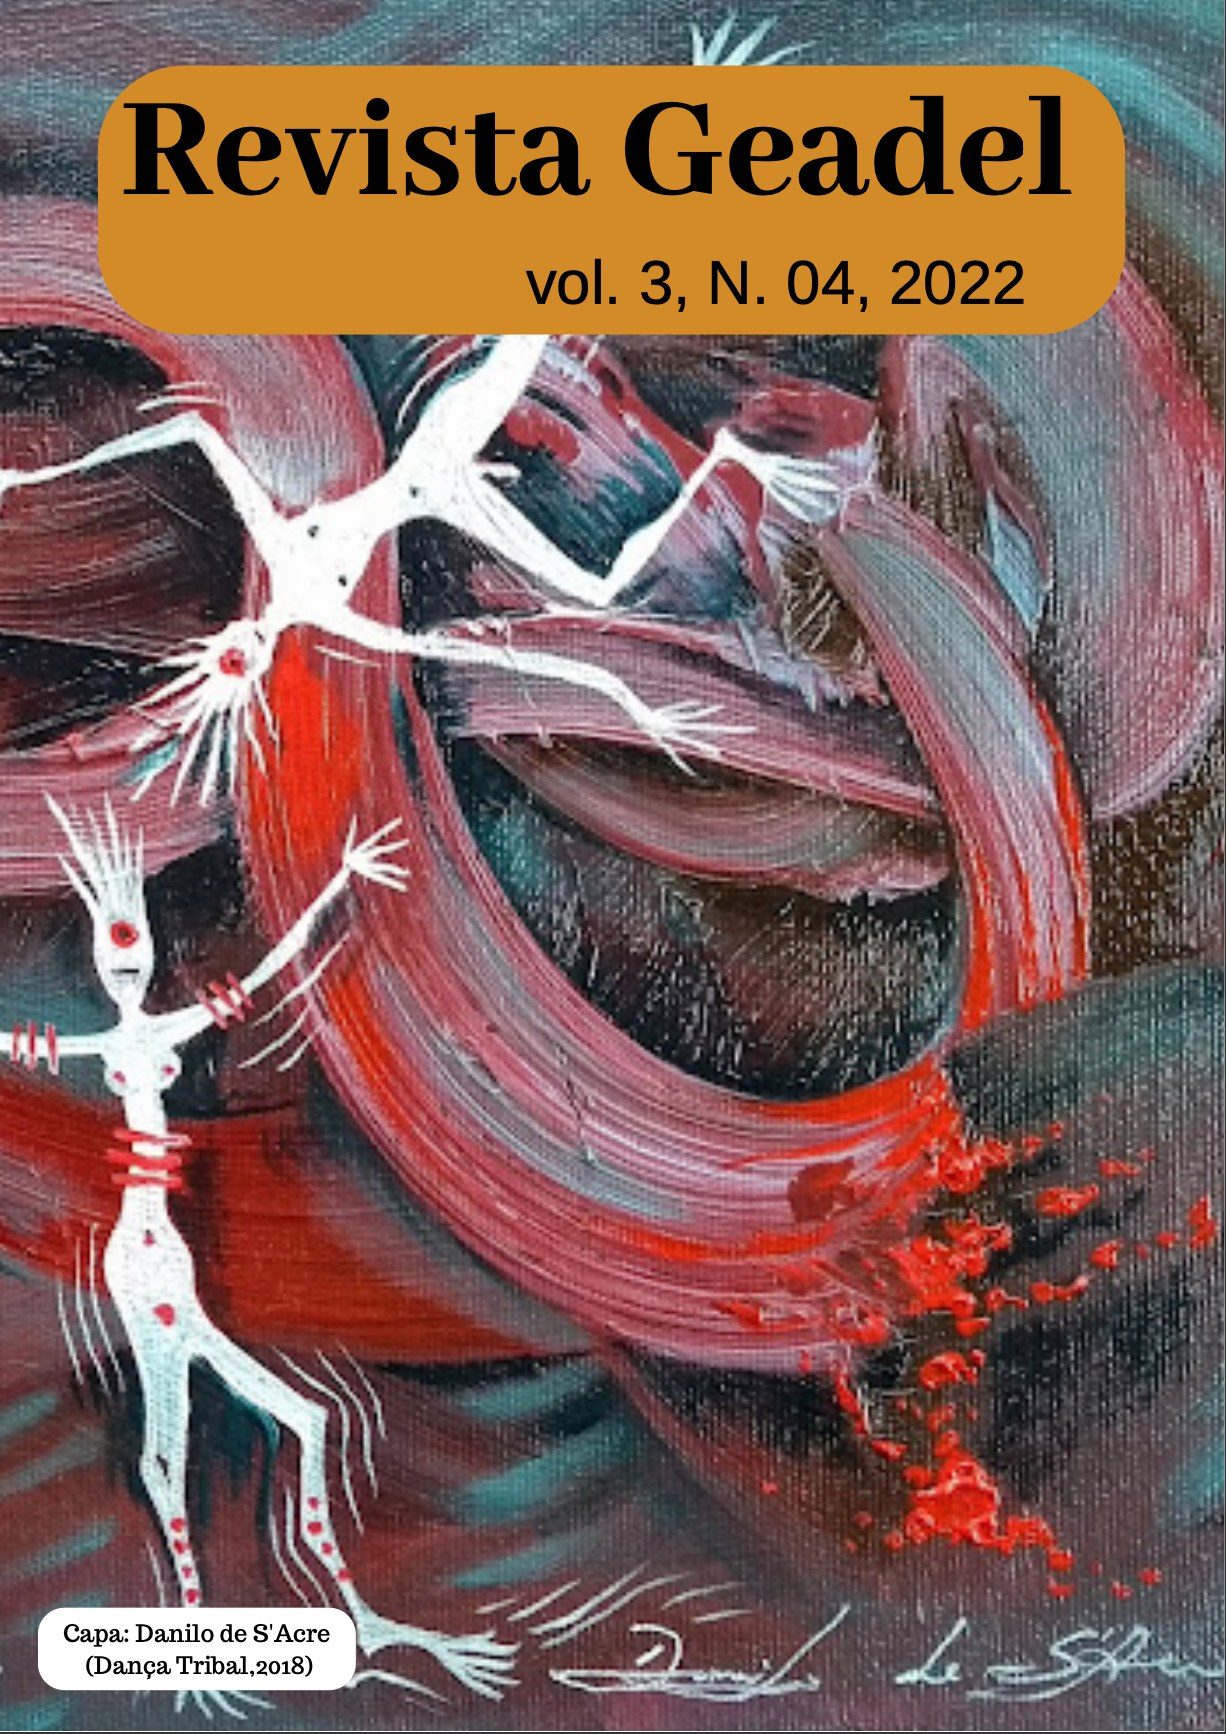 					Visualizar v. 3 n. 04 (2022): Volume Semestral 1-2022
				